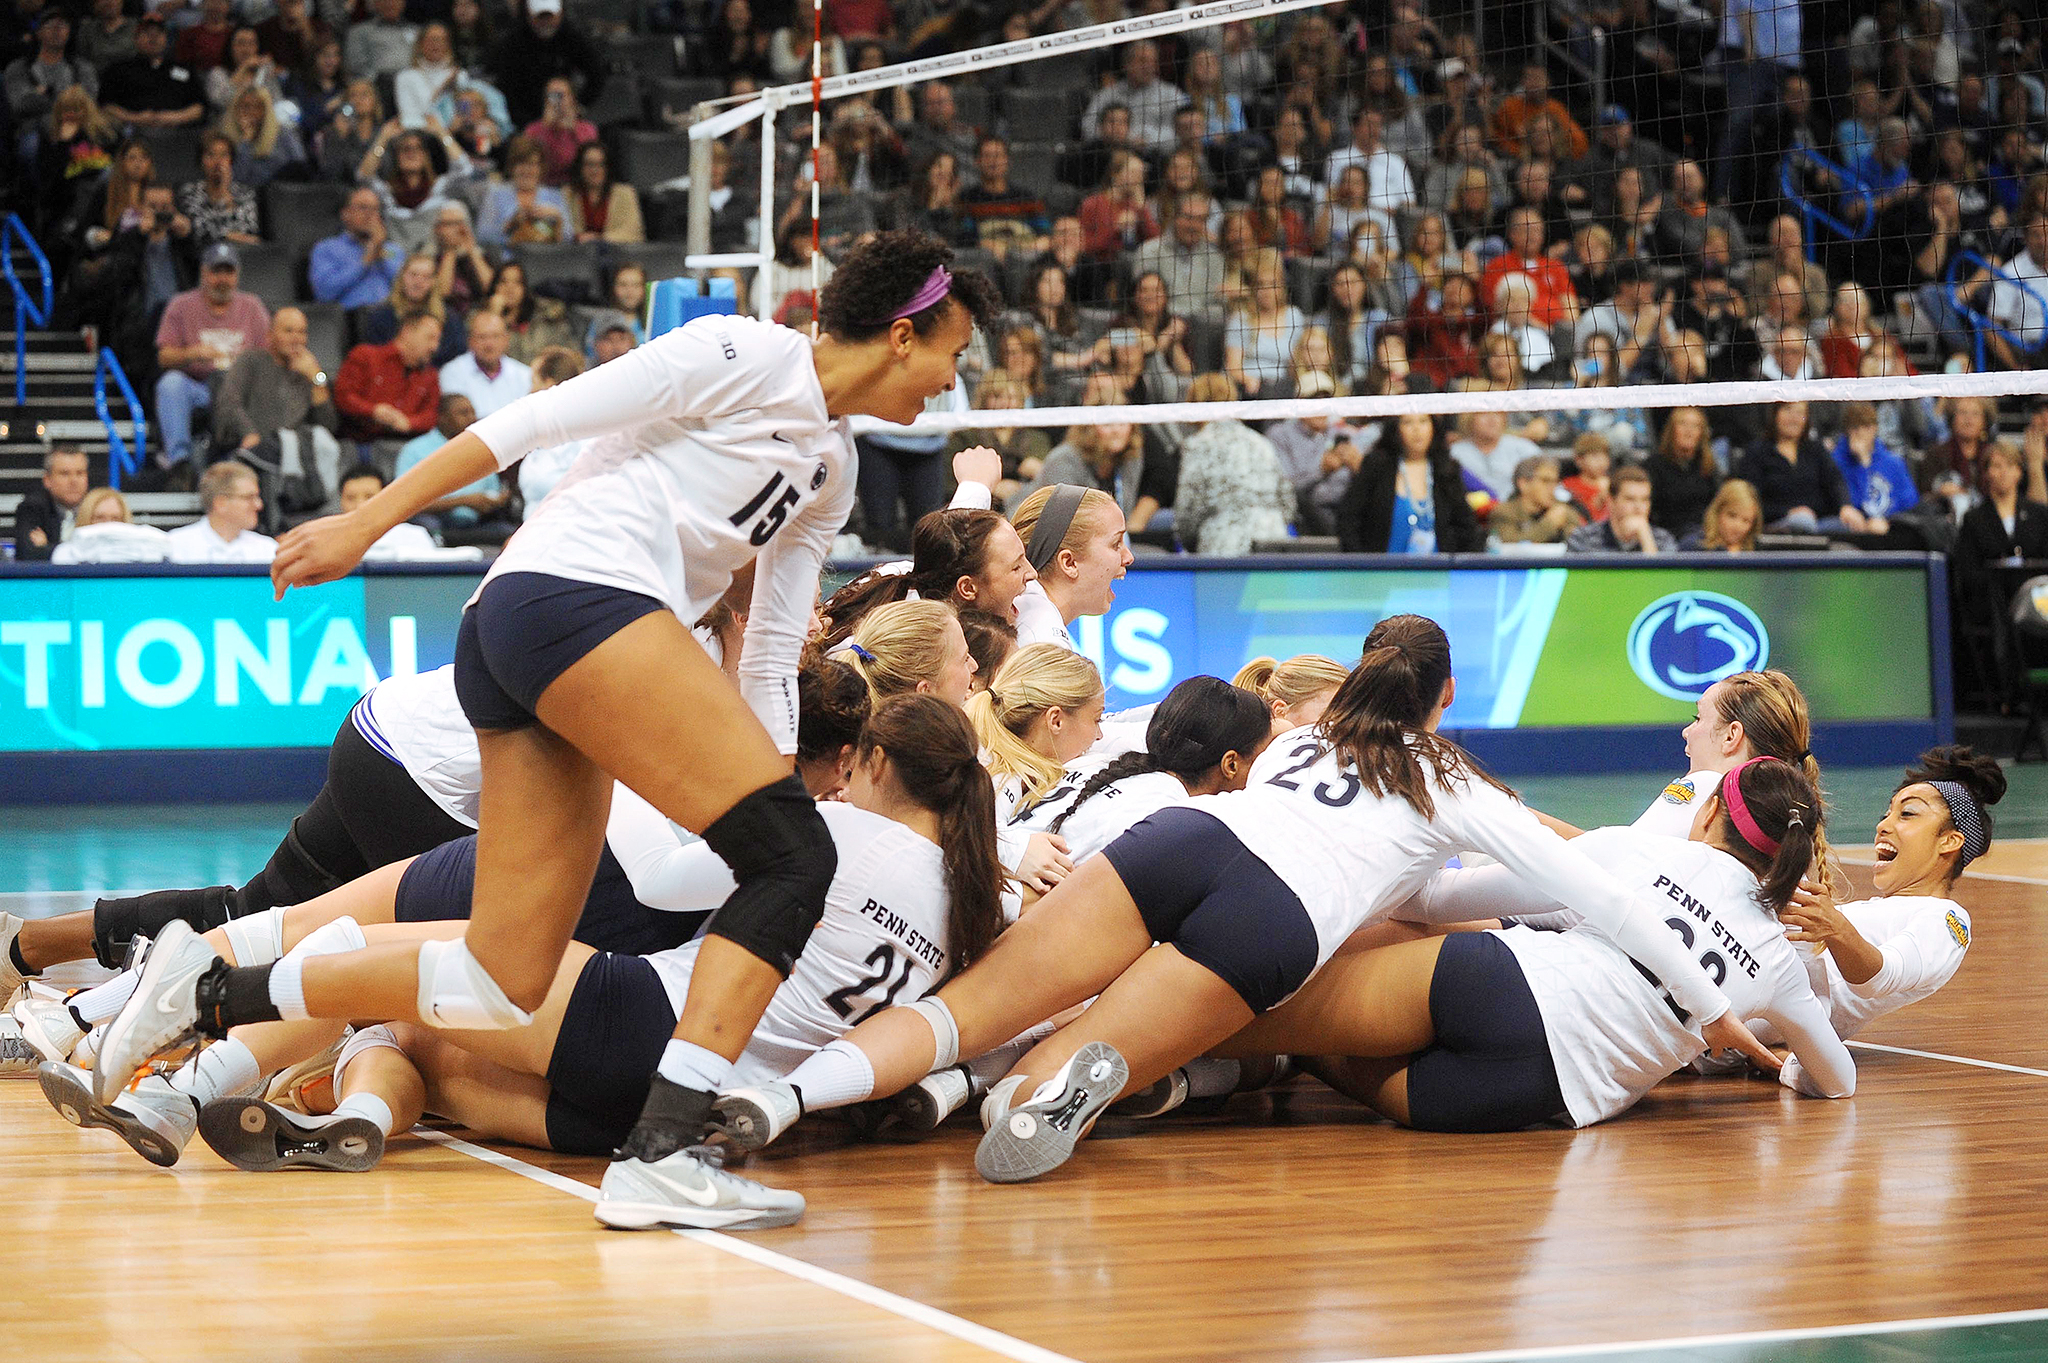 NCAA Volleyball Final: Penn State Celebrates - 2014 NCAA Women's